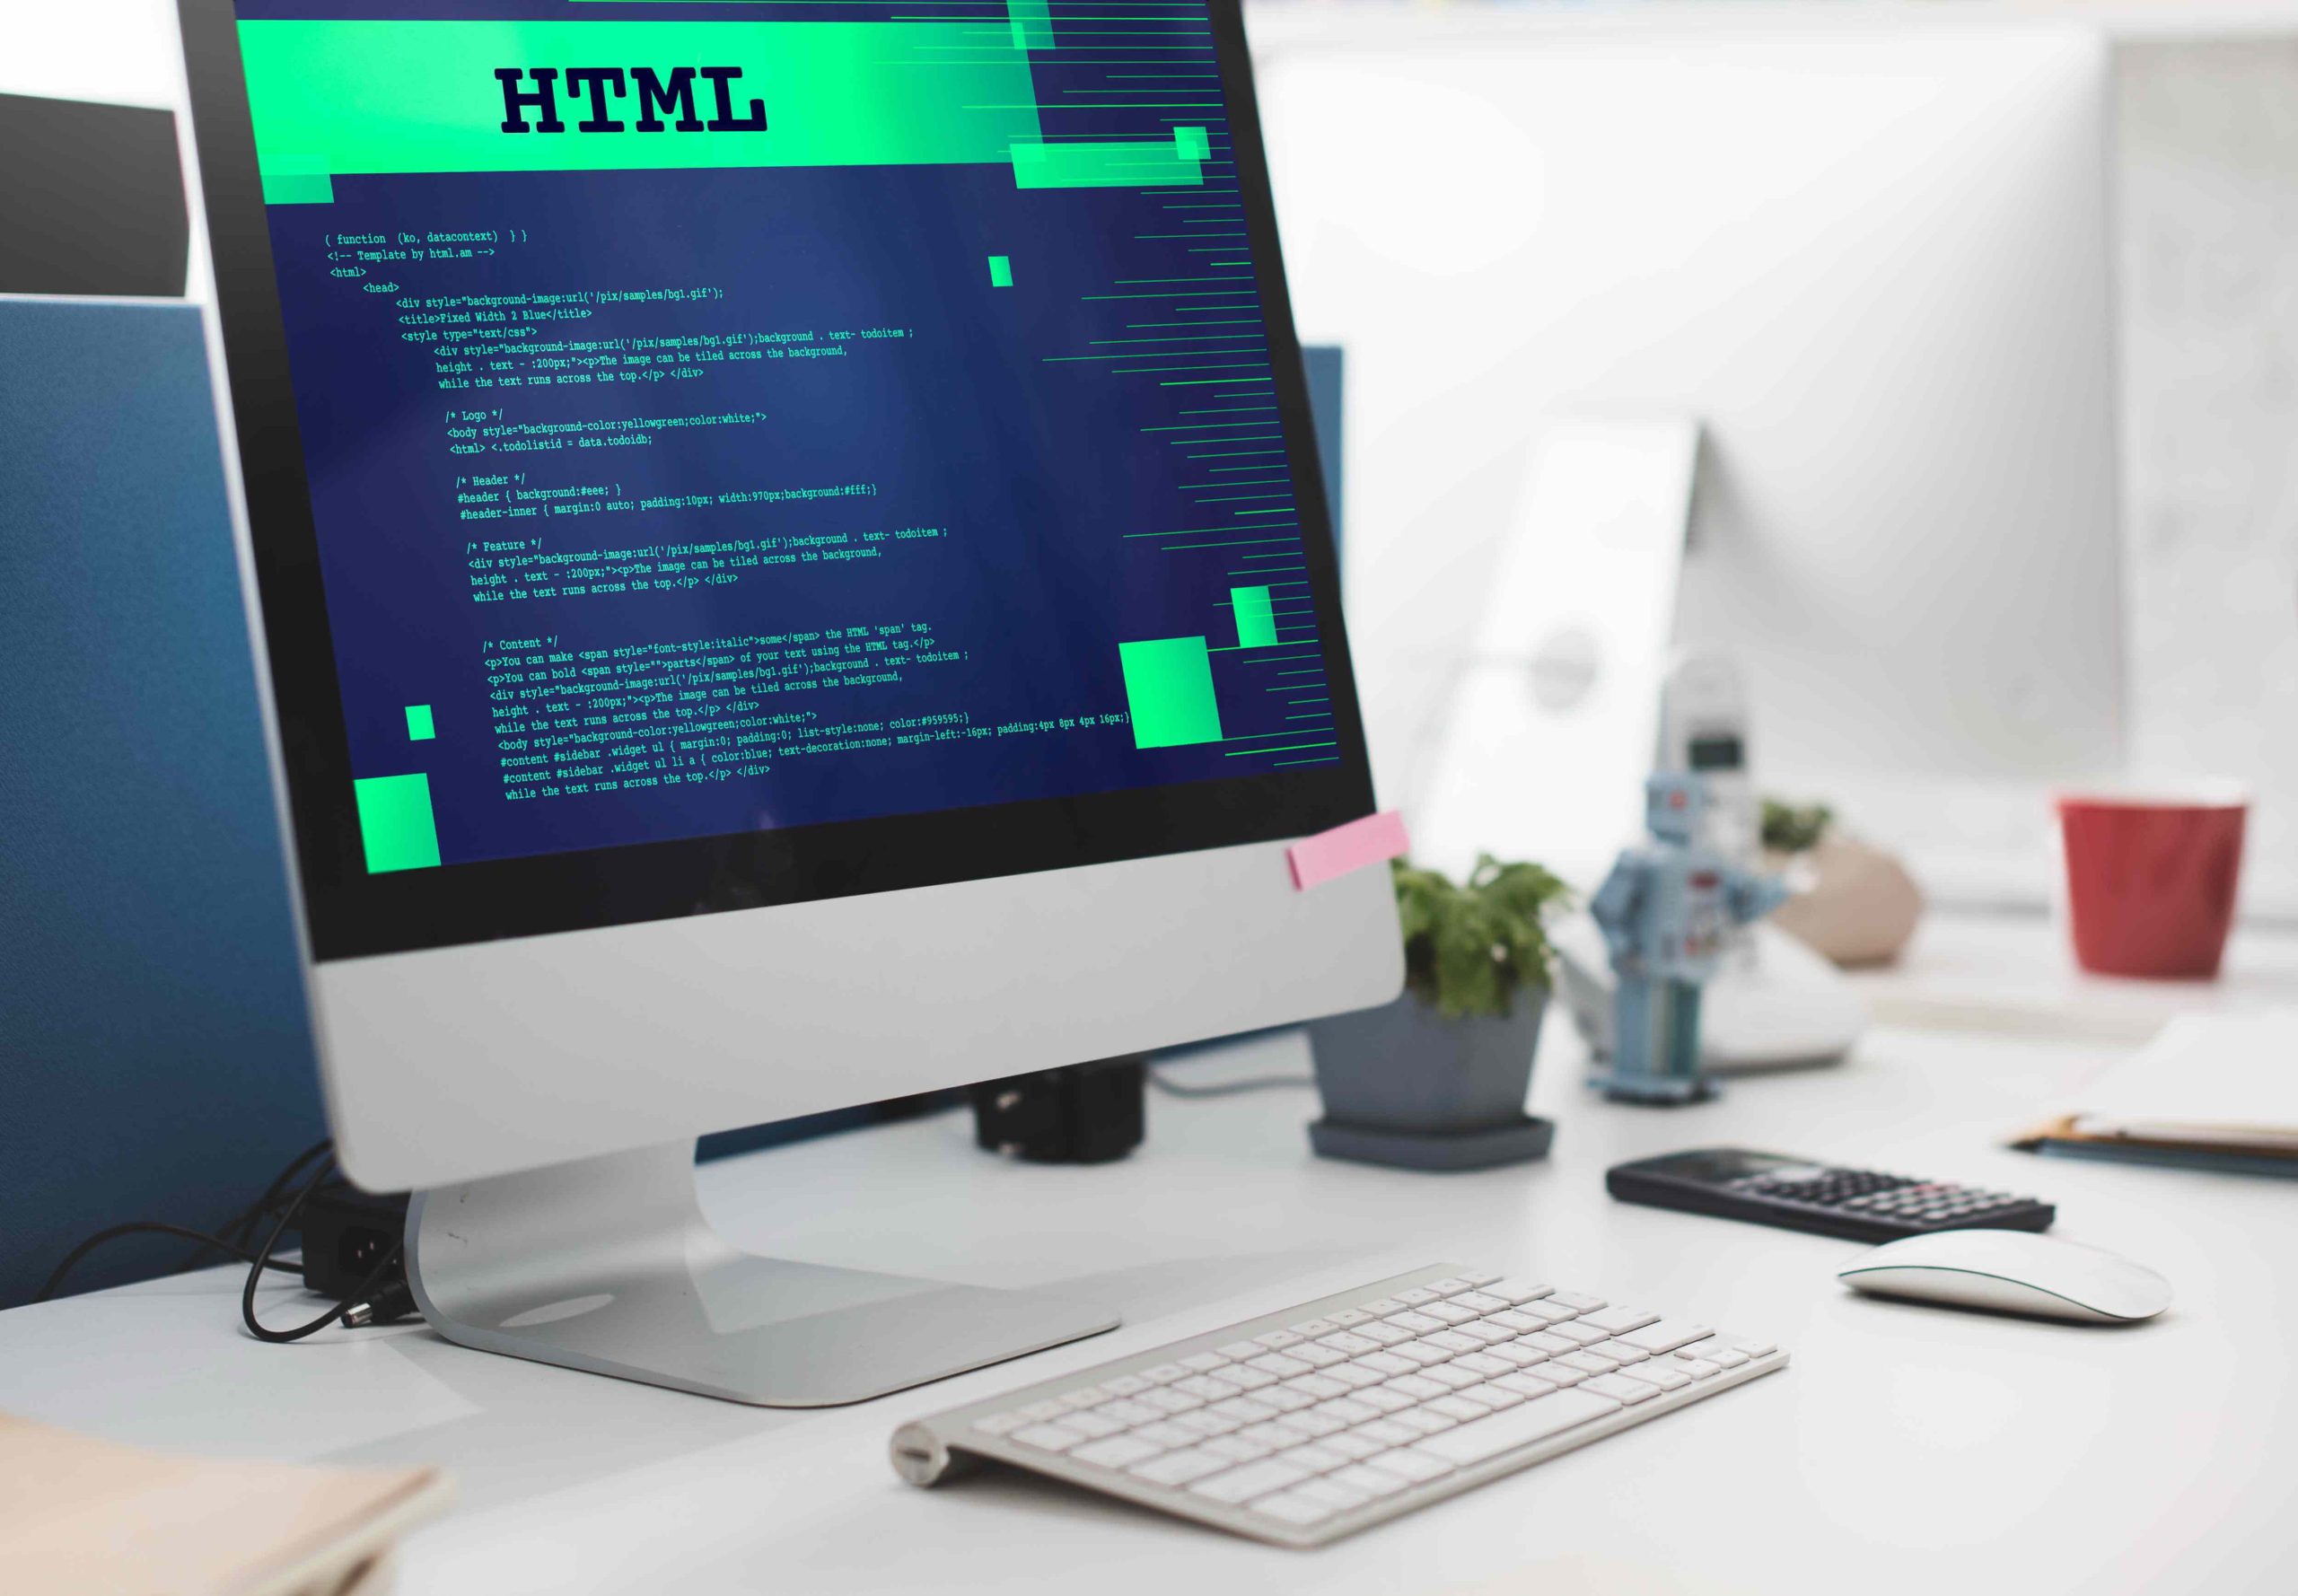 html-programming-advanced-technology-web-concept